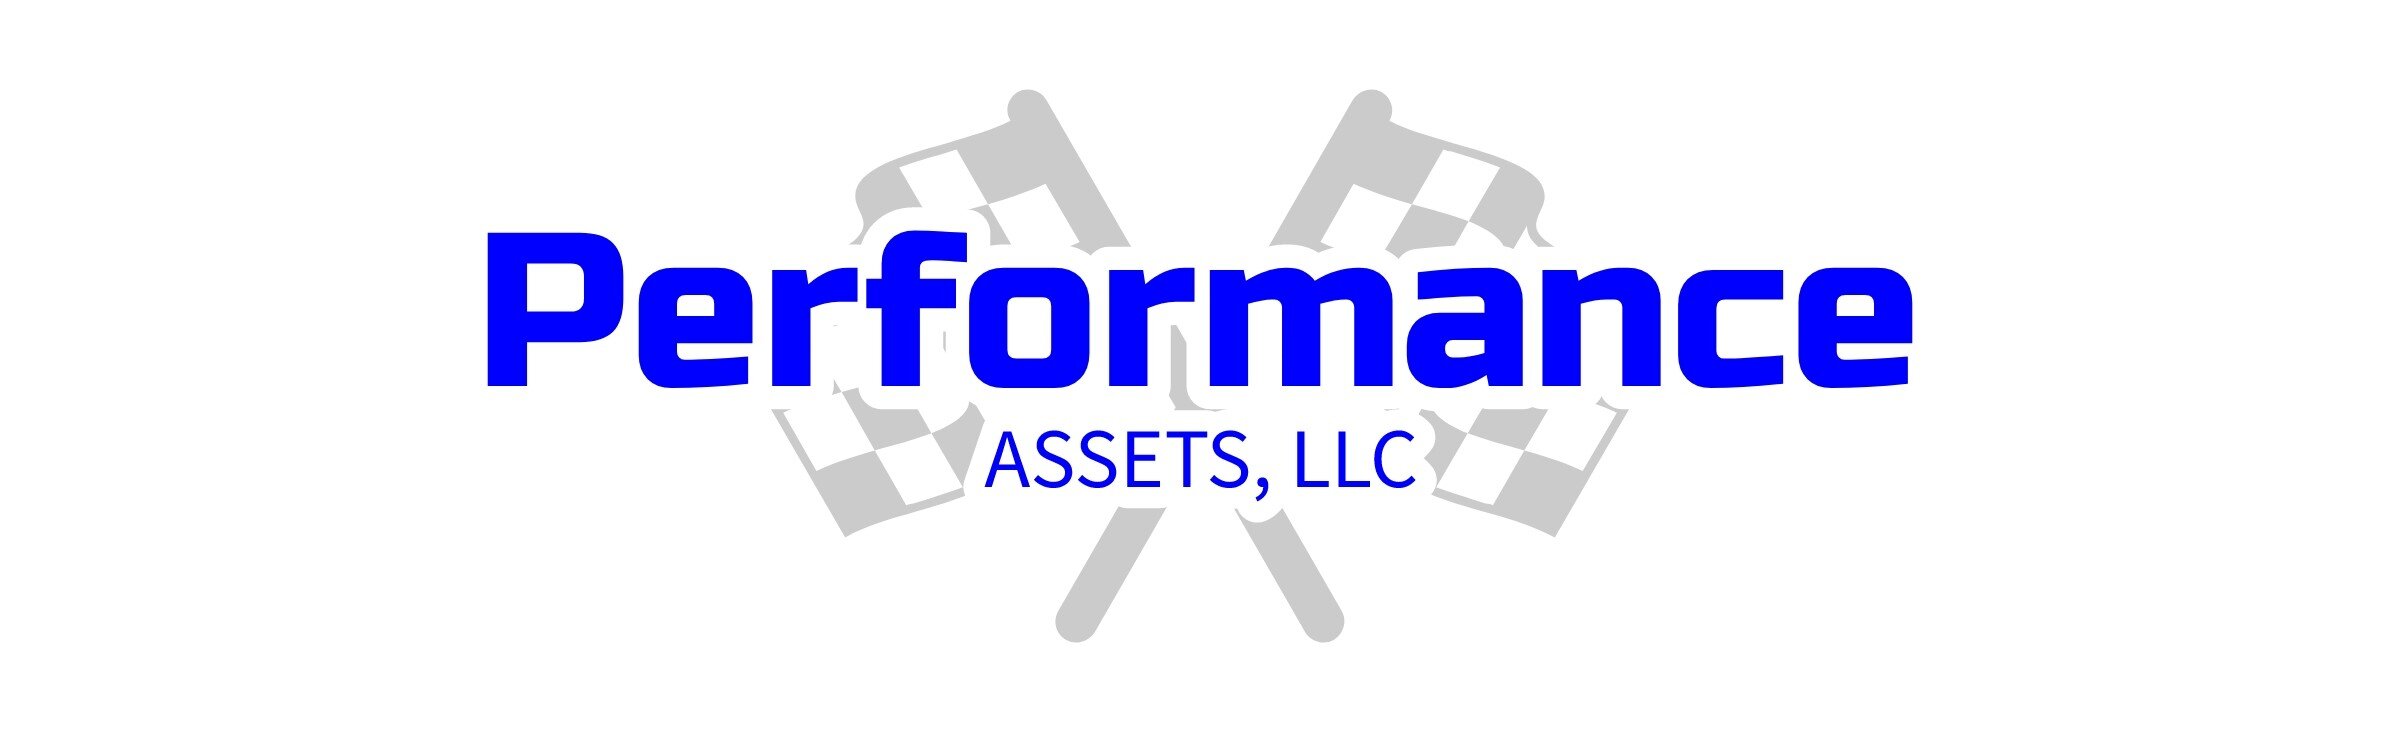 Performance Assets, LLC logo